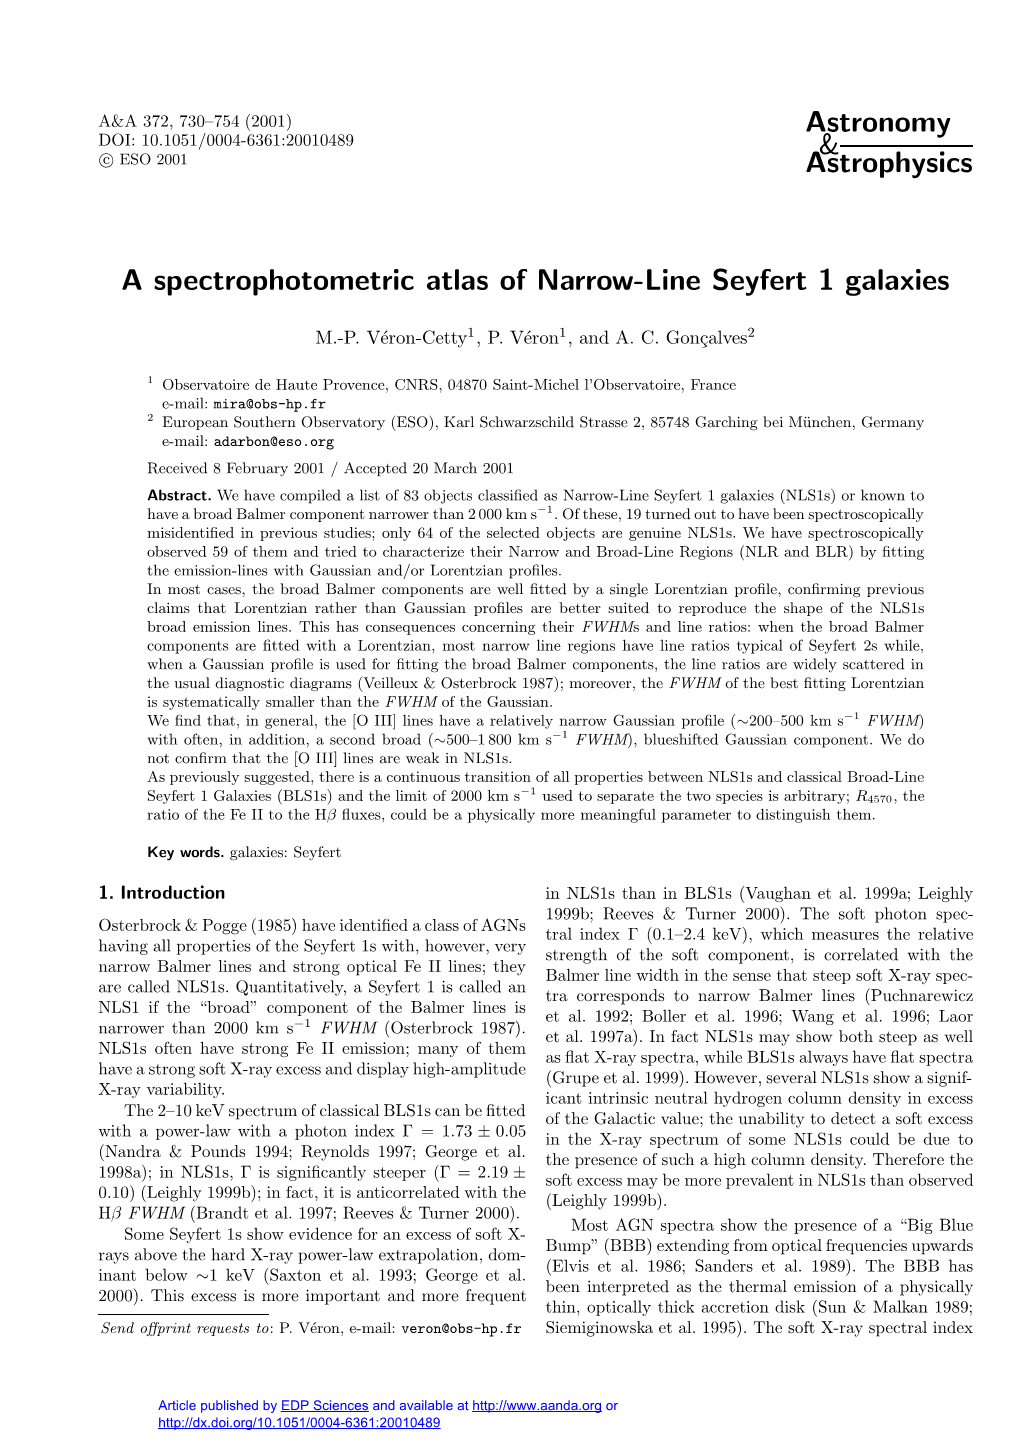 A Spectrophotometric Atlas of Narrow-Line Seyfert 1 Galaxies